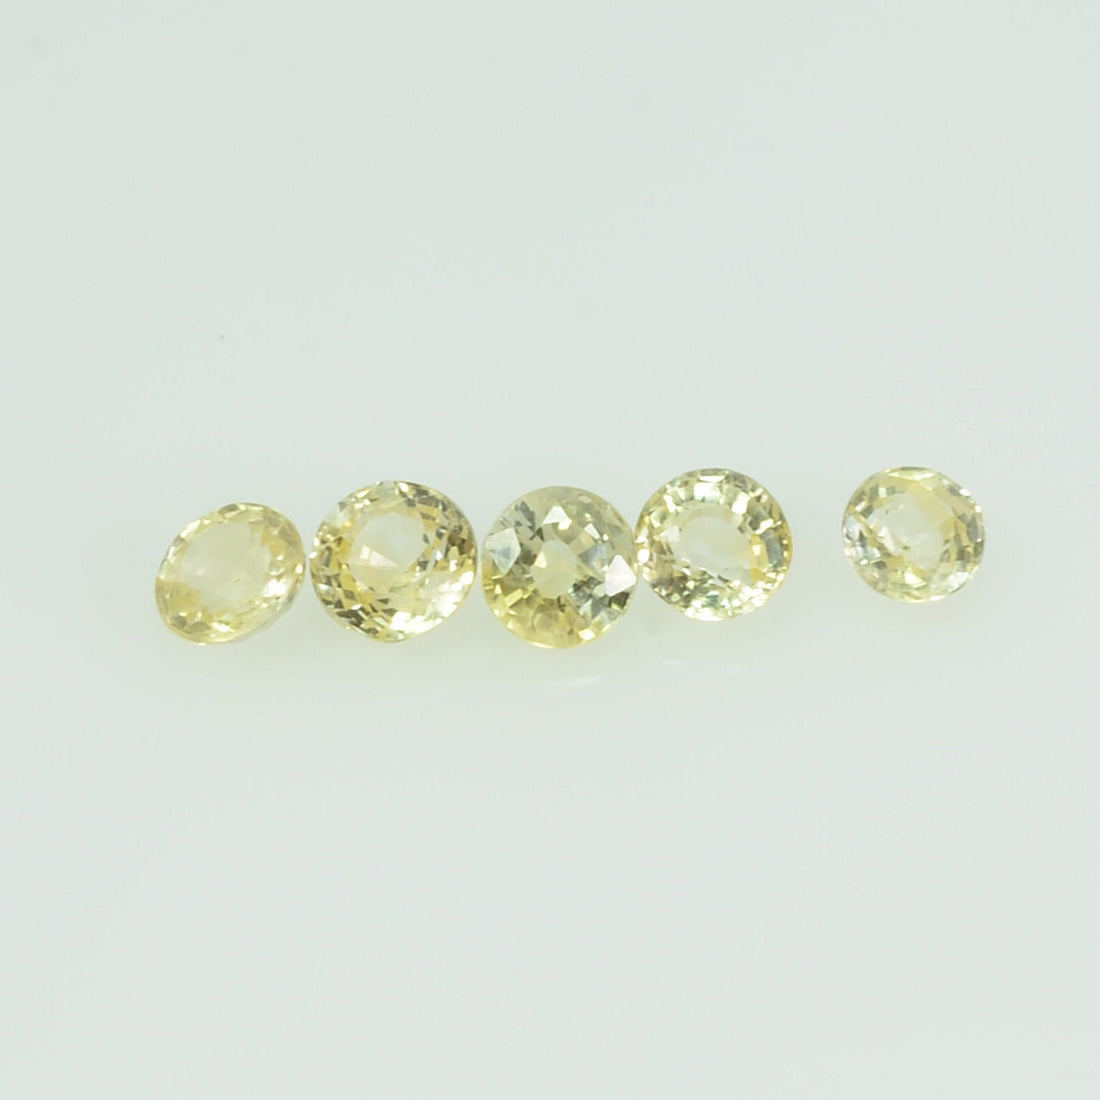 2.5 mm Natural Yellow Sapphire Loose Gemstone Round Cut